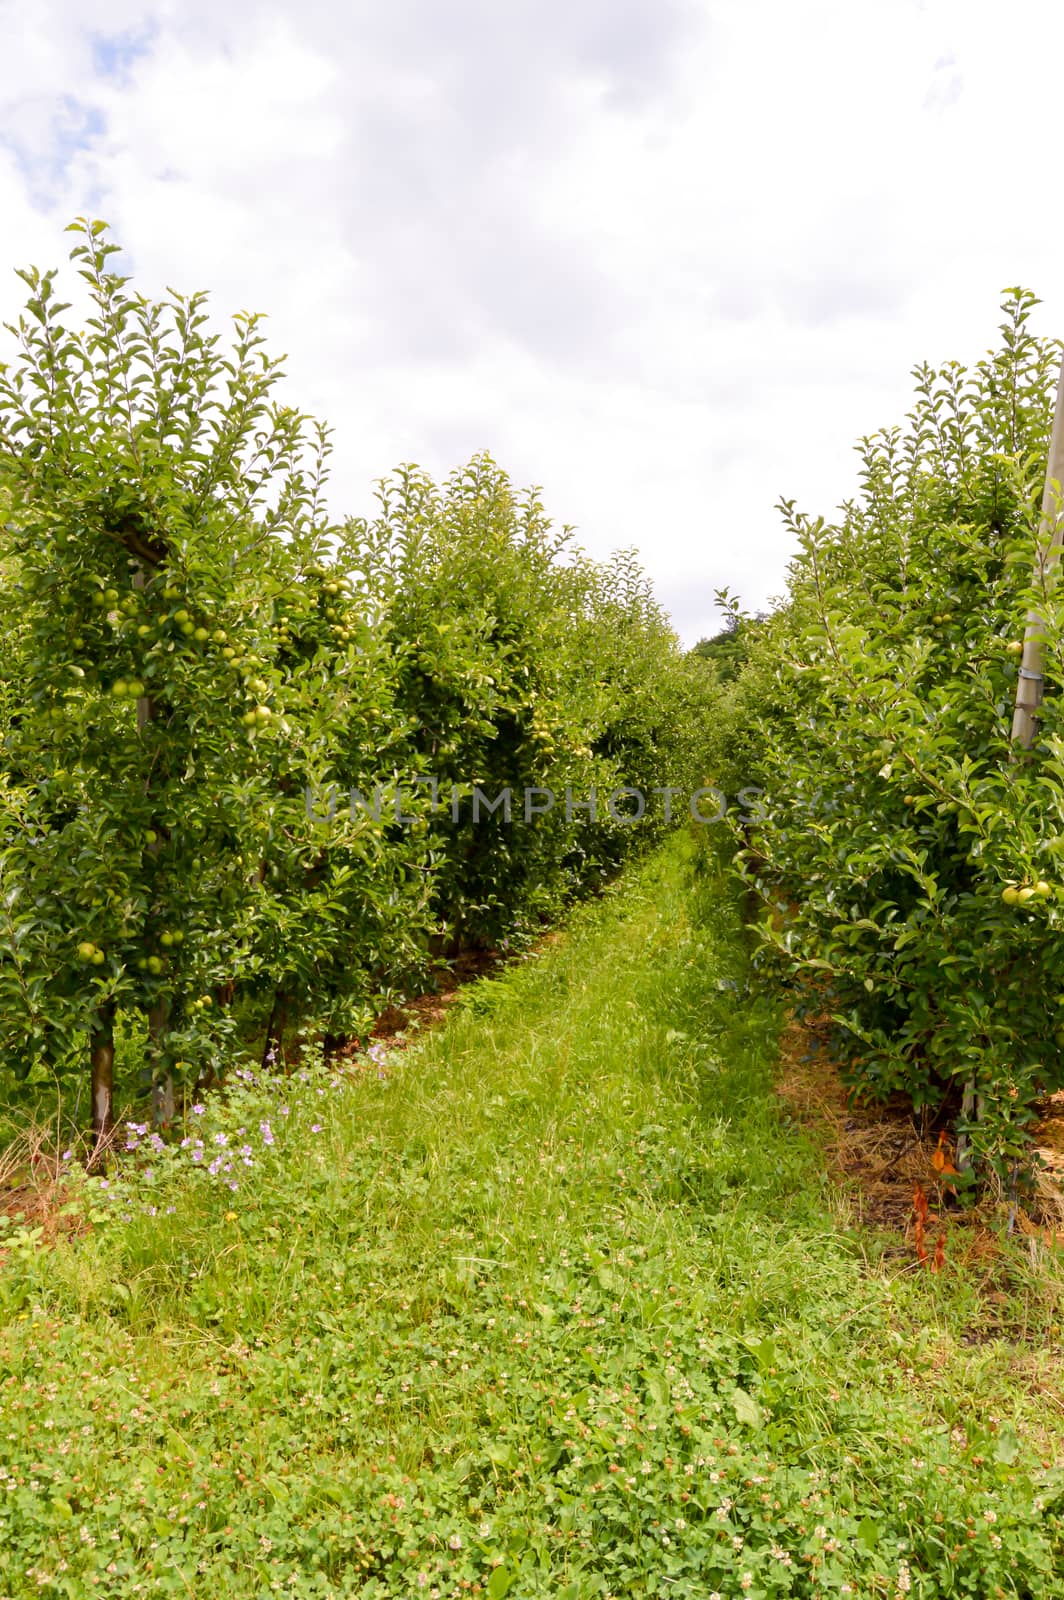 Fields of apple trees in the region of Trentino Alto Adige